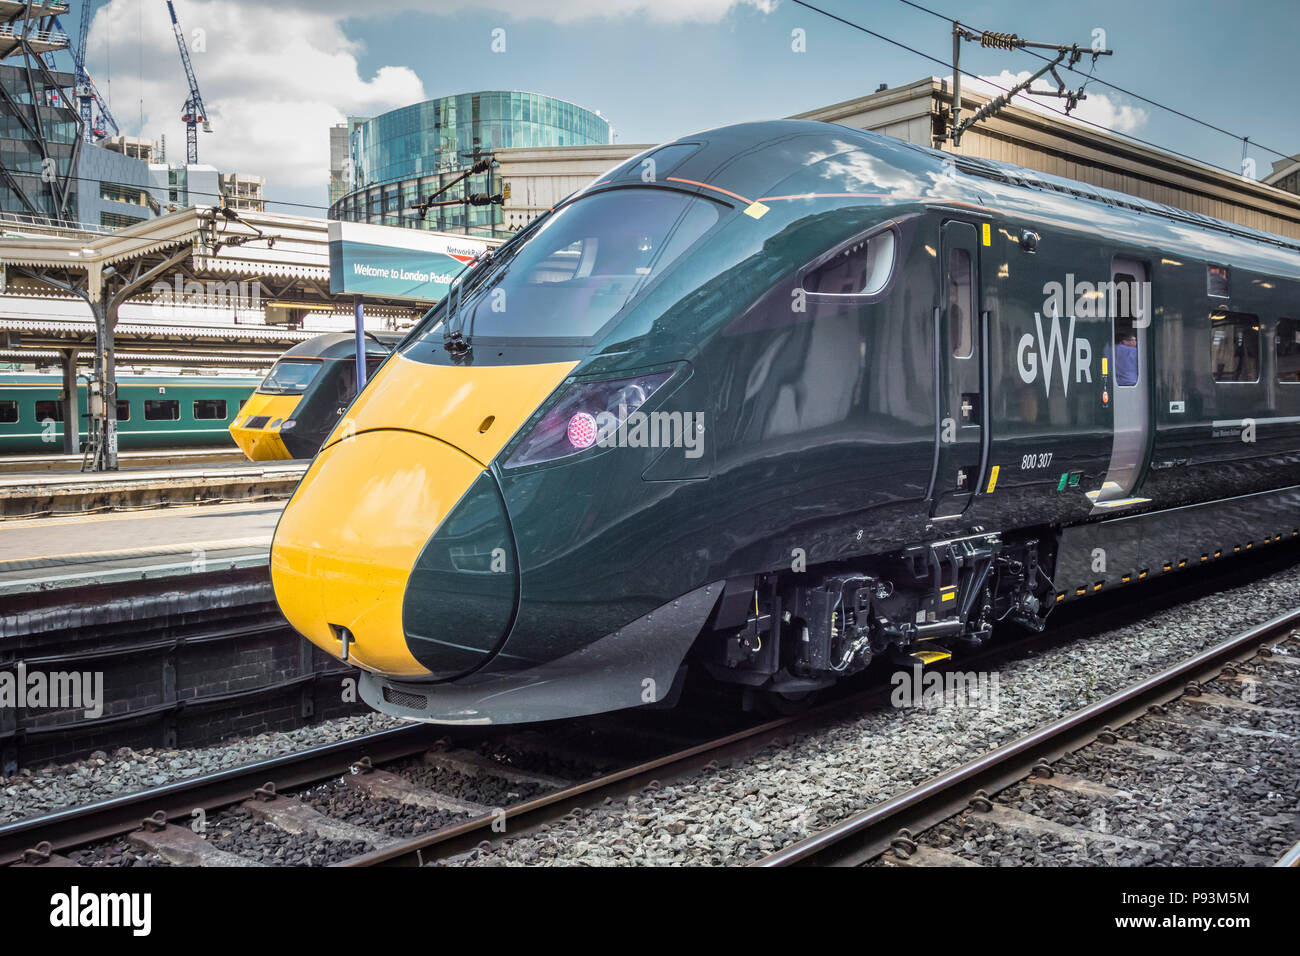 Hitachi Class 800 Intercity-Express locomotive train at Paddington Station, London, UK Stock Photo